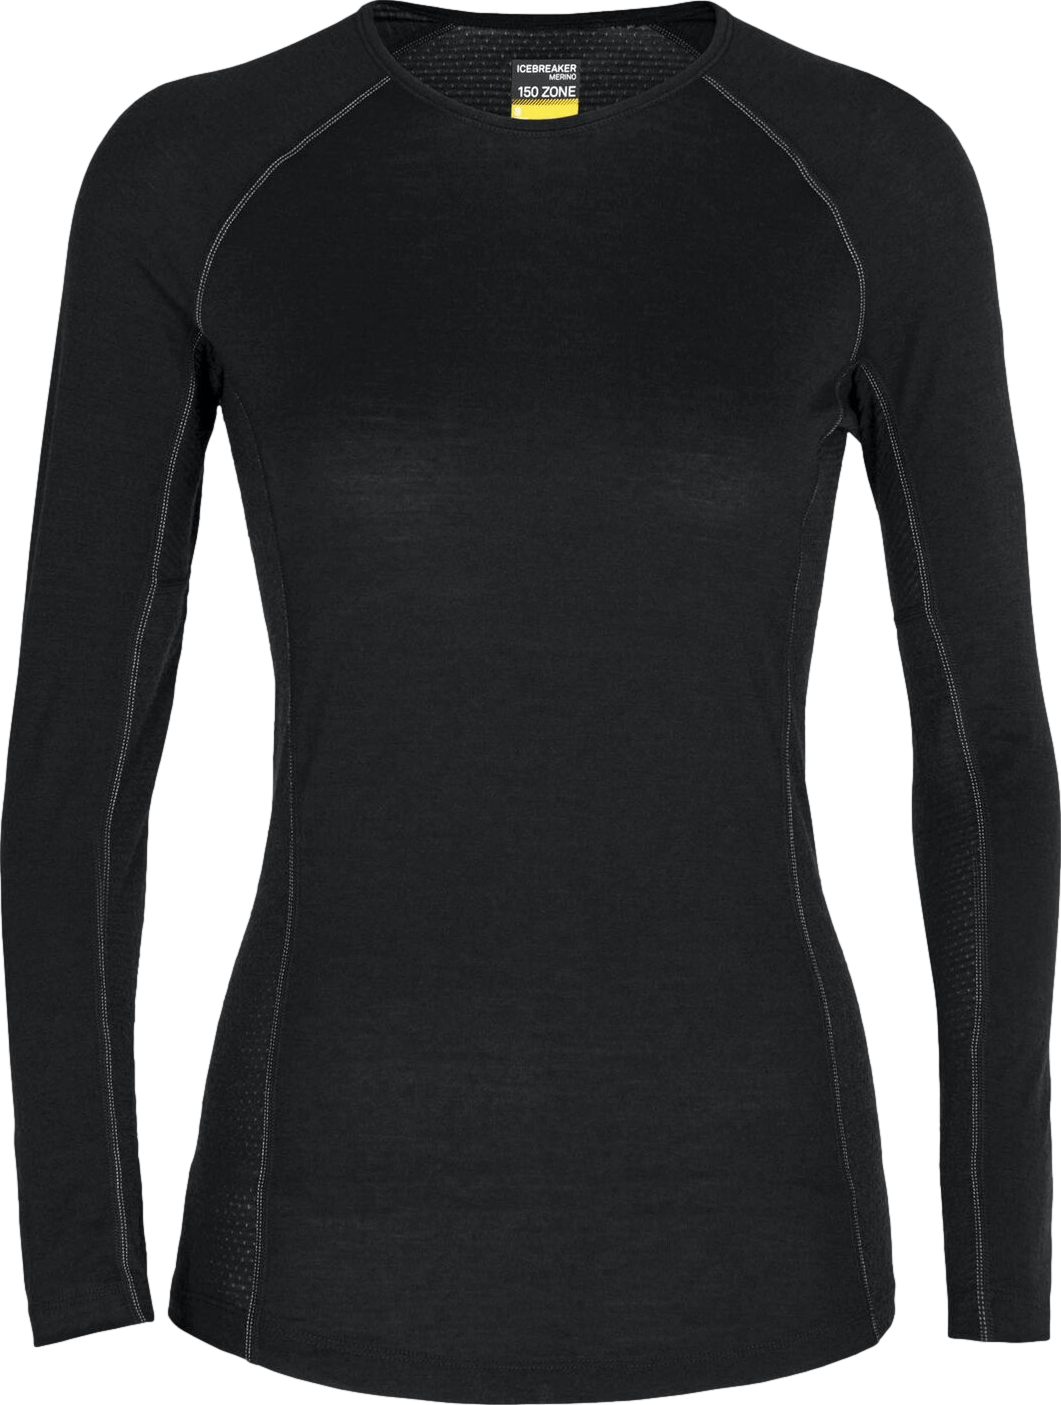 Icebreaker Women's 150 Zone Long Sleeve Baselayer Shirt